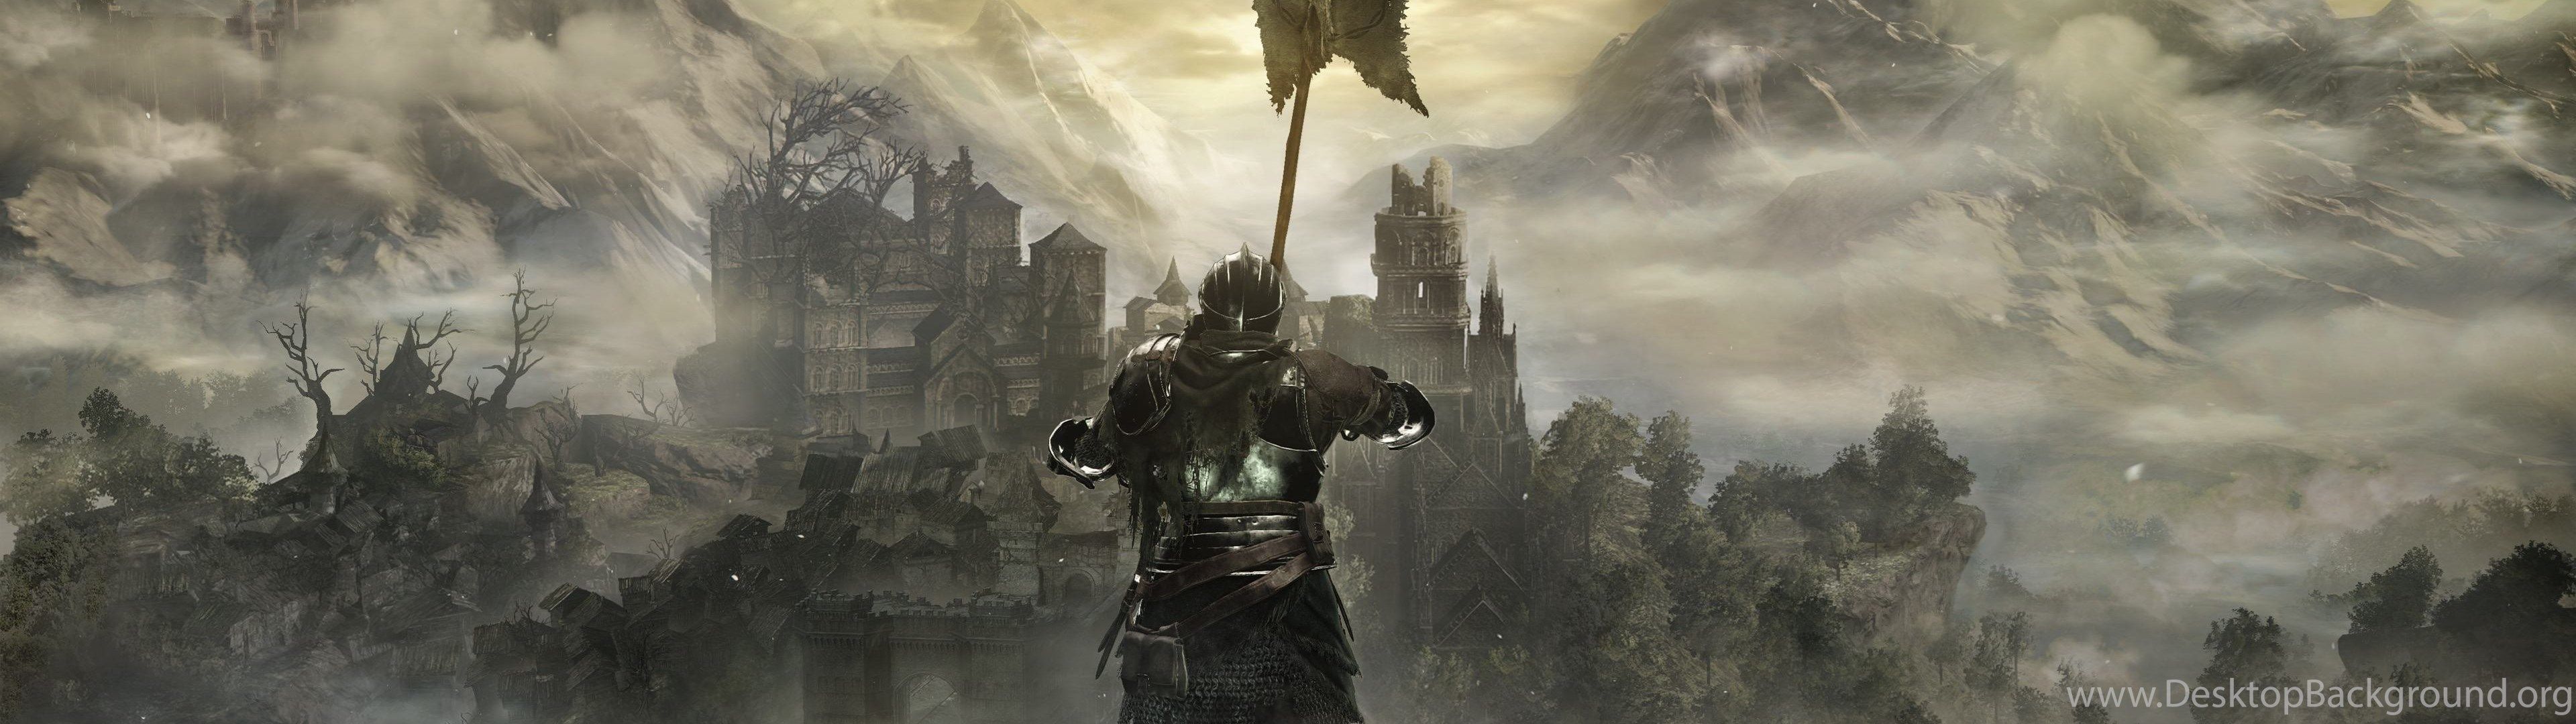 Dark Souls PC Game Wallpaper Free Download High Quality Desktop Background